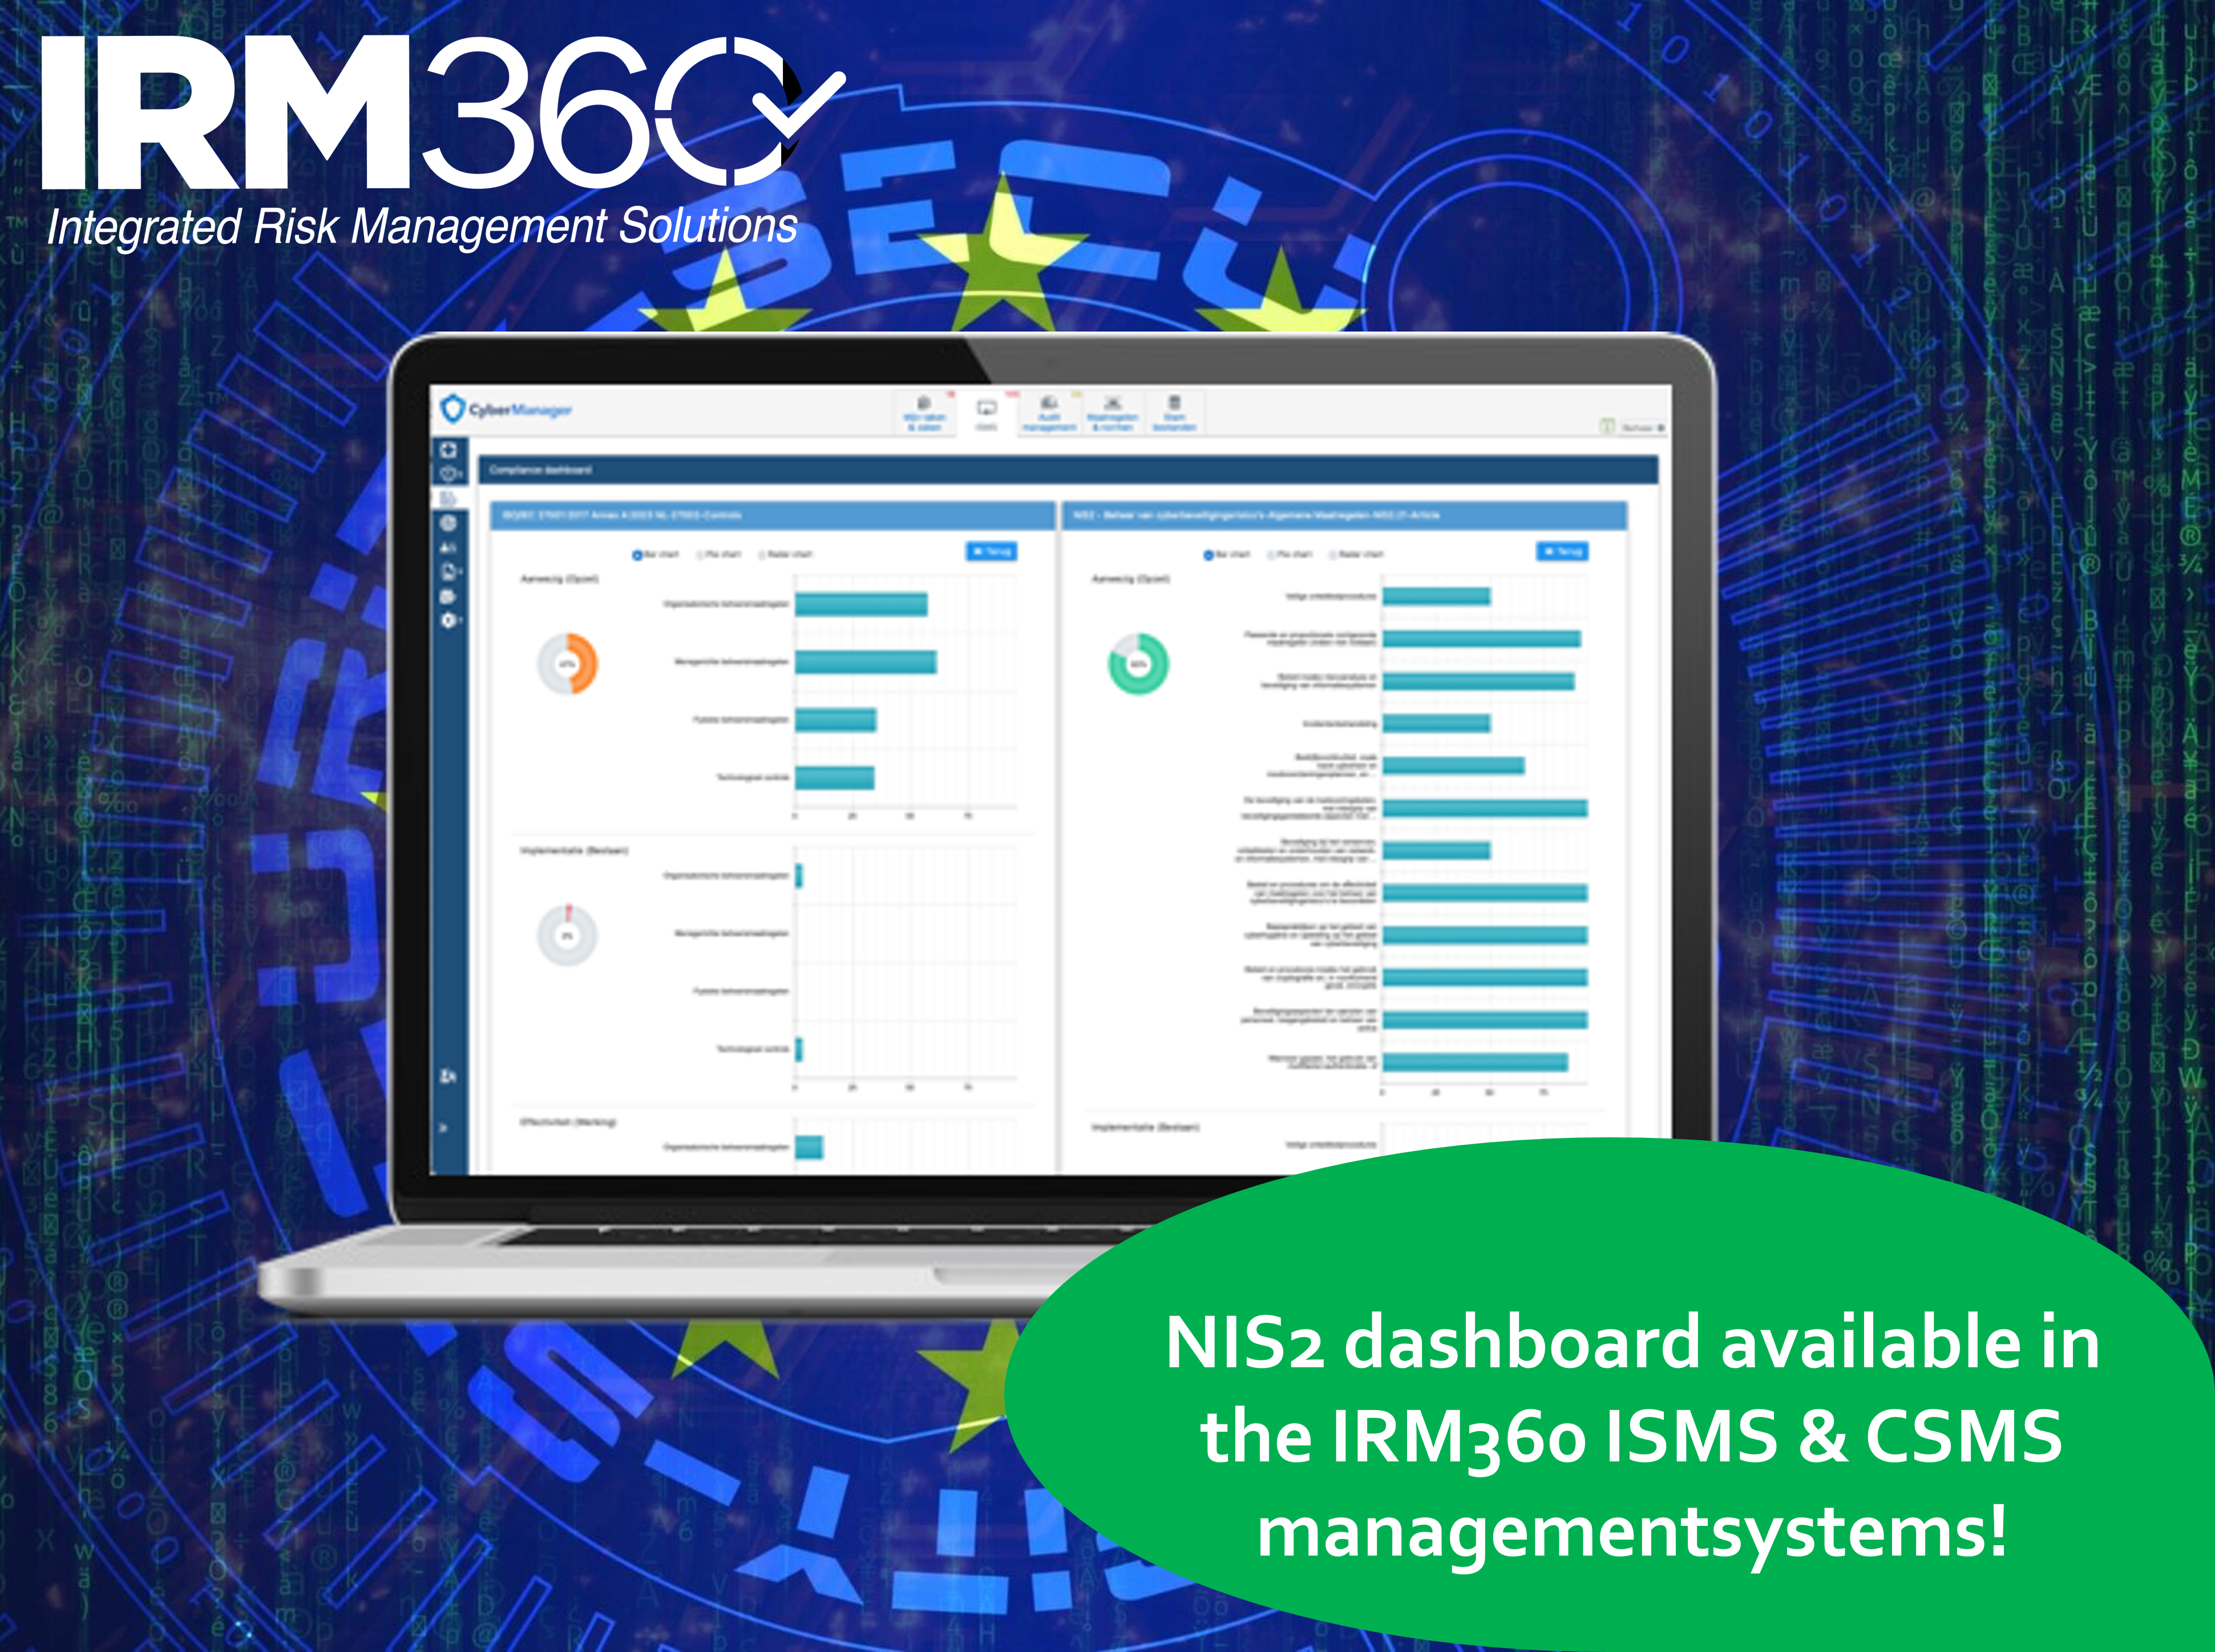 NIS2 dashboards en mappings beschikbaar in de IRM360 CyberManager!